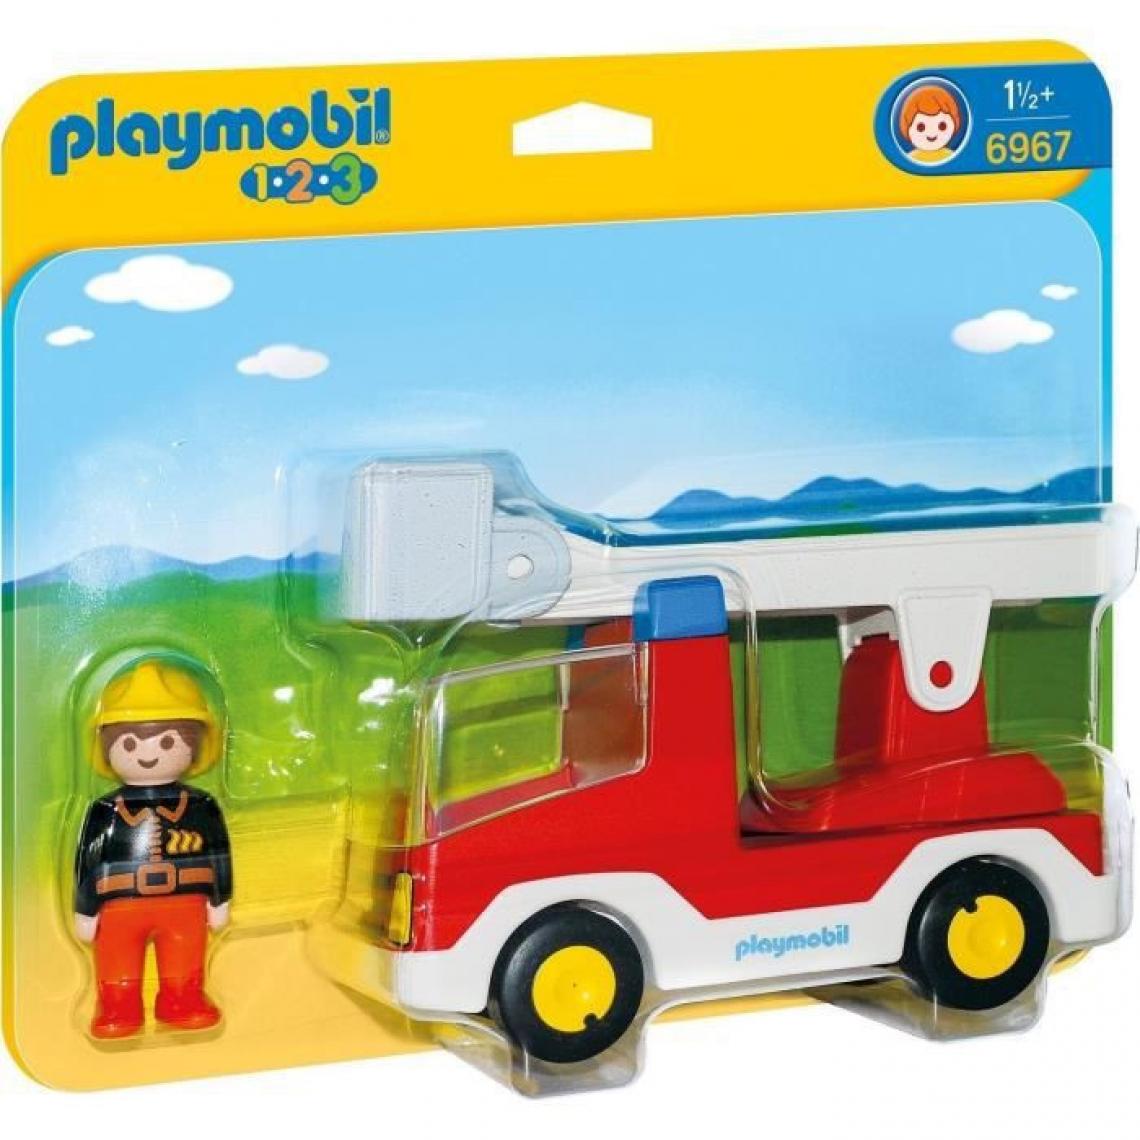 Playmobil - PLAYMOBIL 6967 - PLAYMOBIL 1.2.3 - Camion de Pompier avec Echelle Pivotante - Playmobil